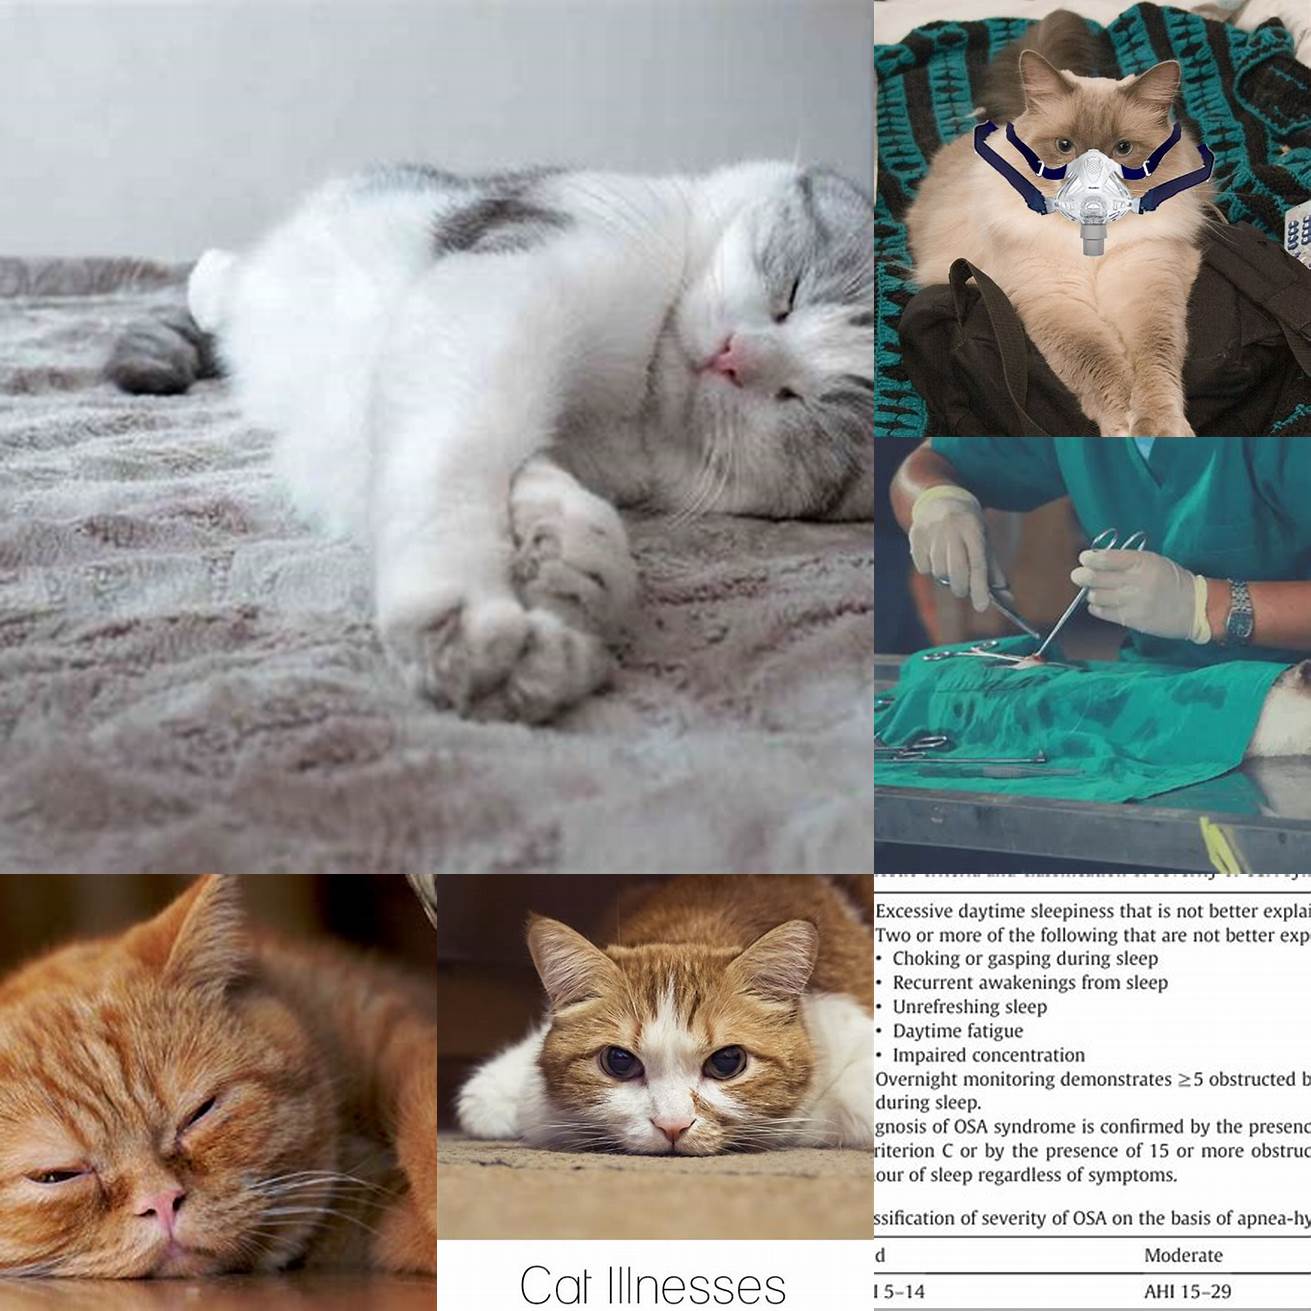 Q How is sleep apnea diagnosed in cats